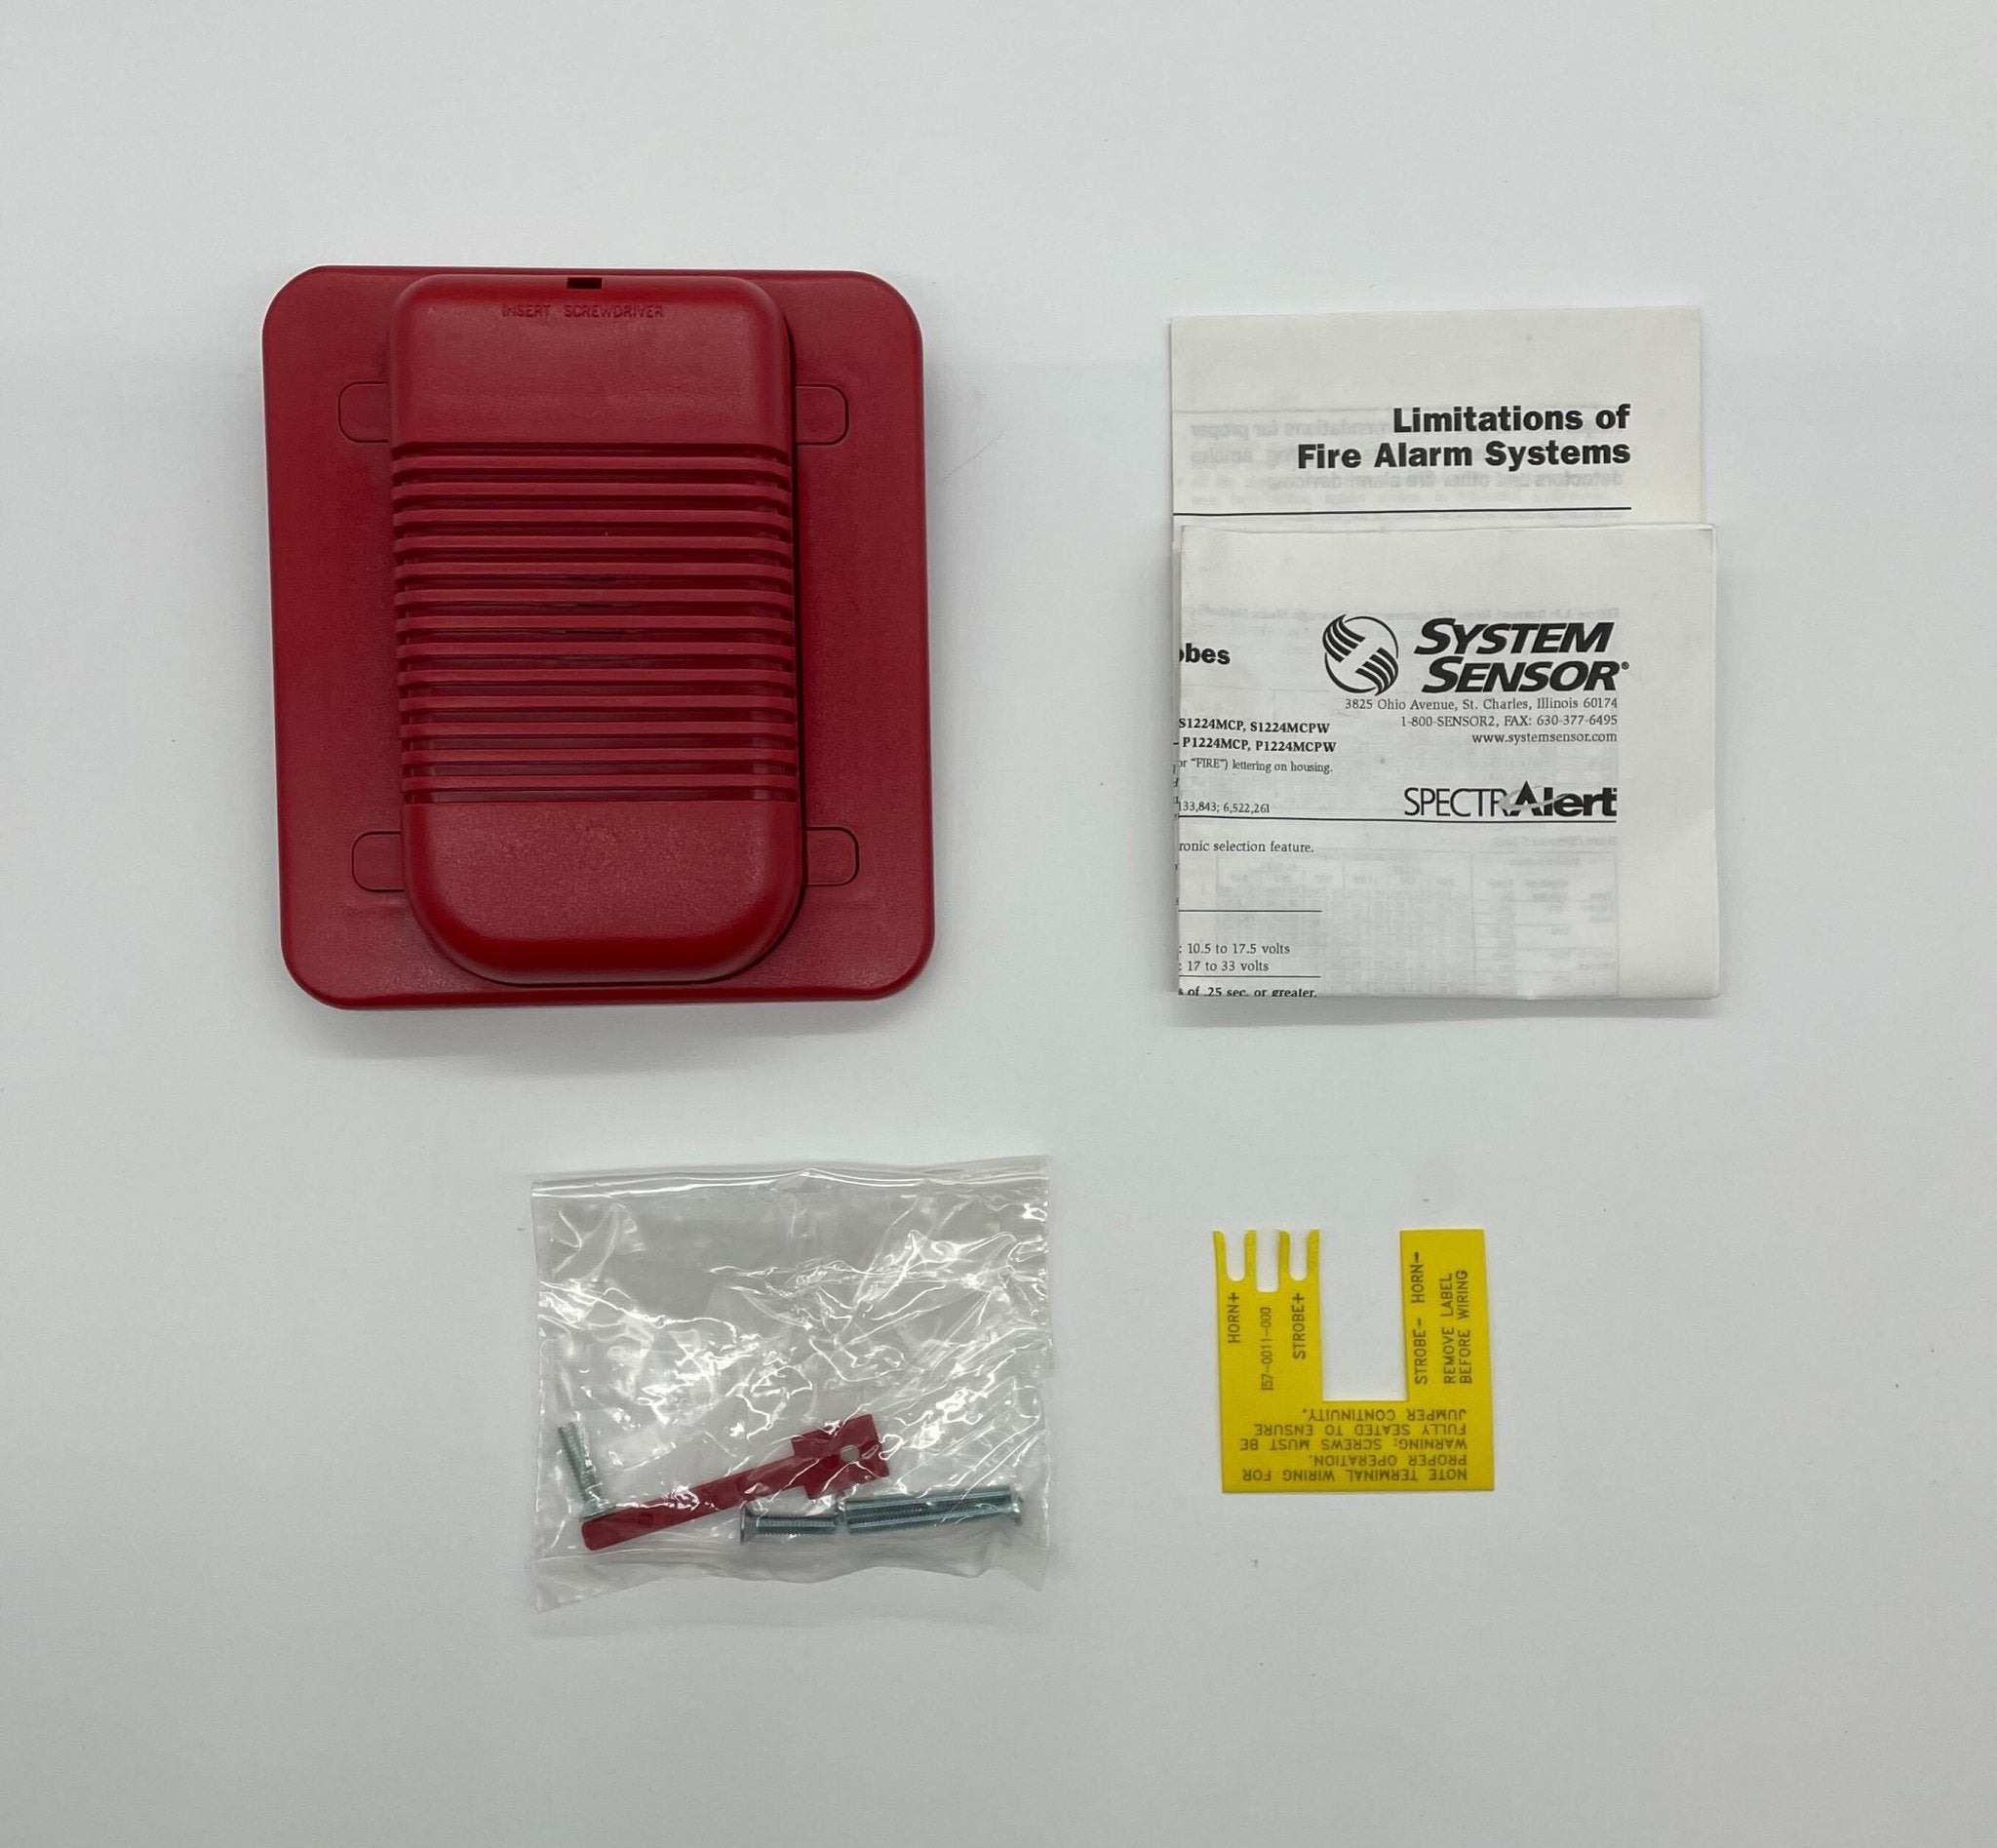 System Sensor H12/24 - The Fire Alarm Supplier